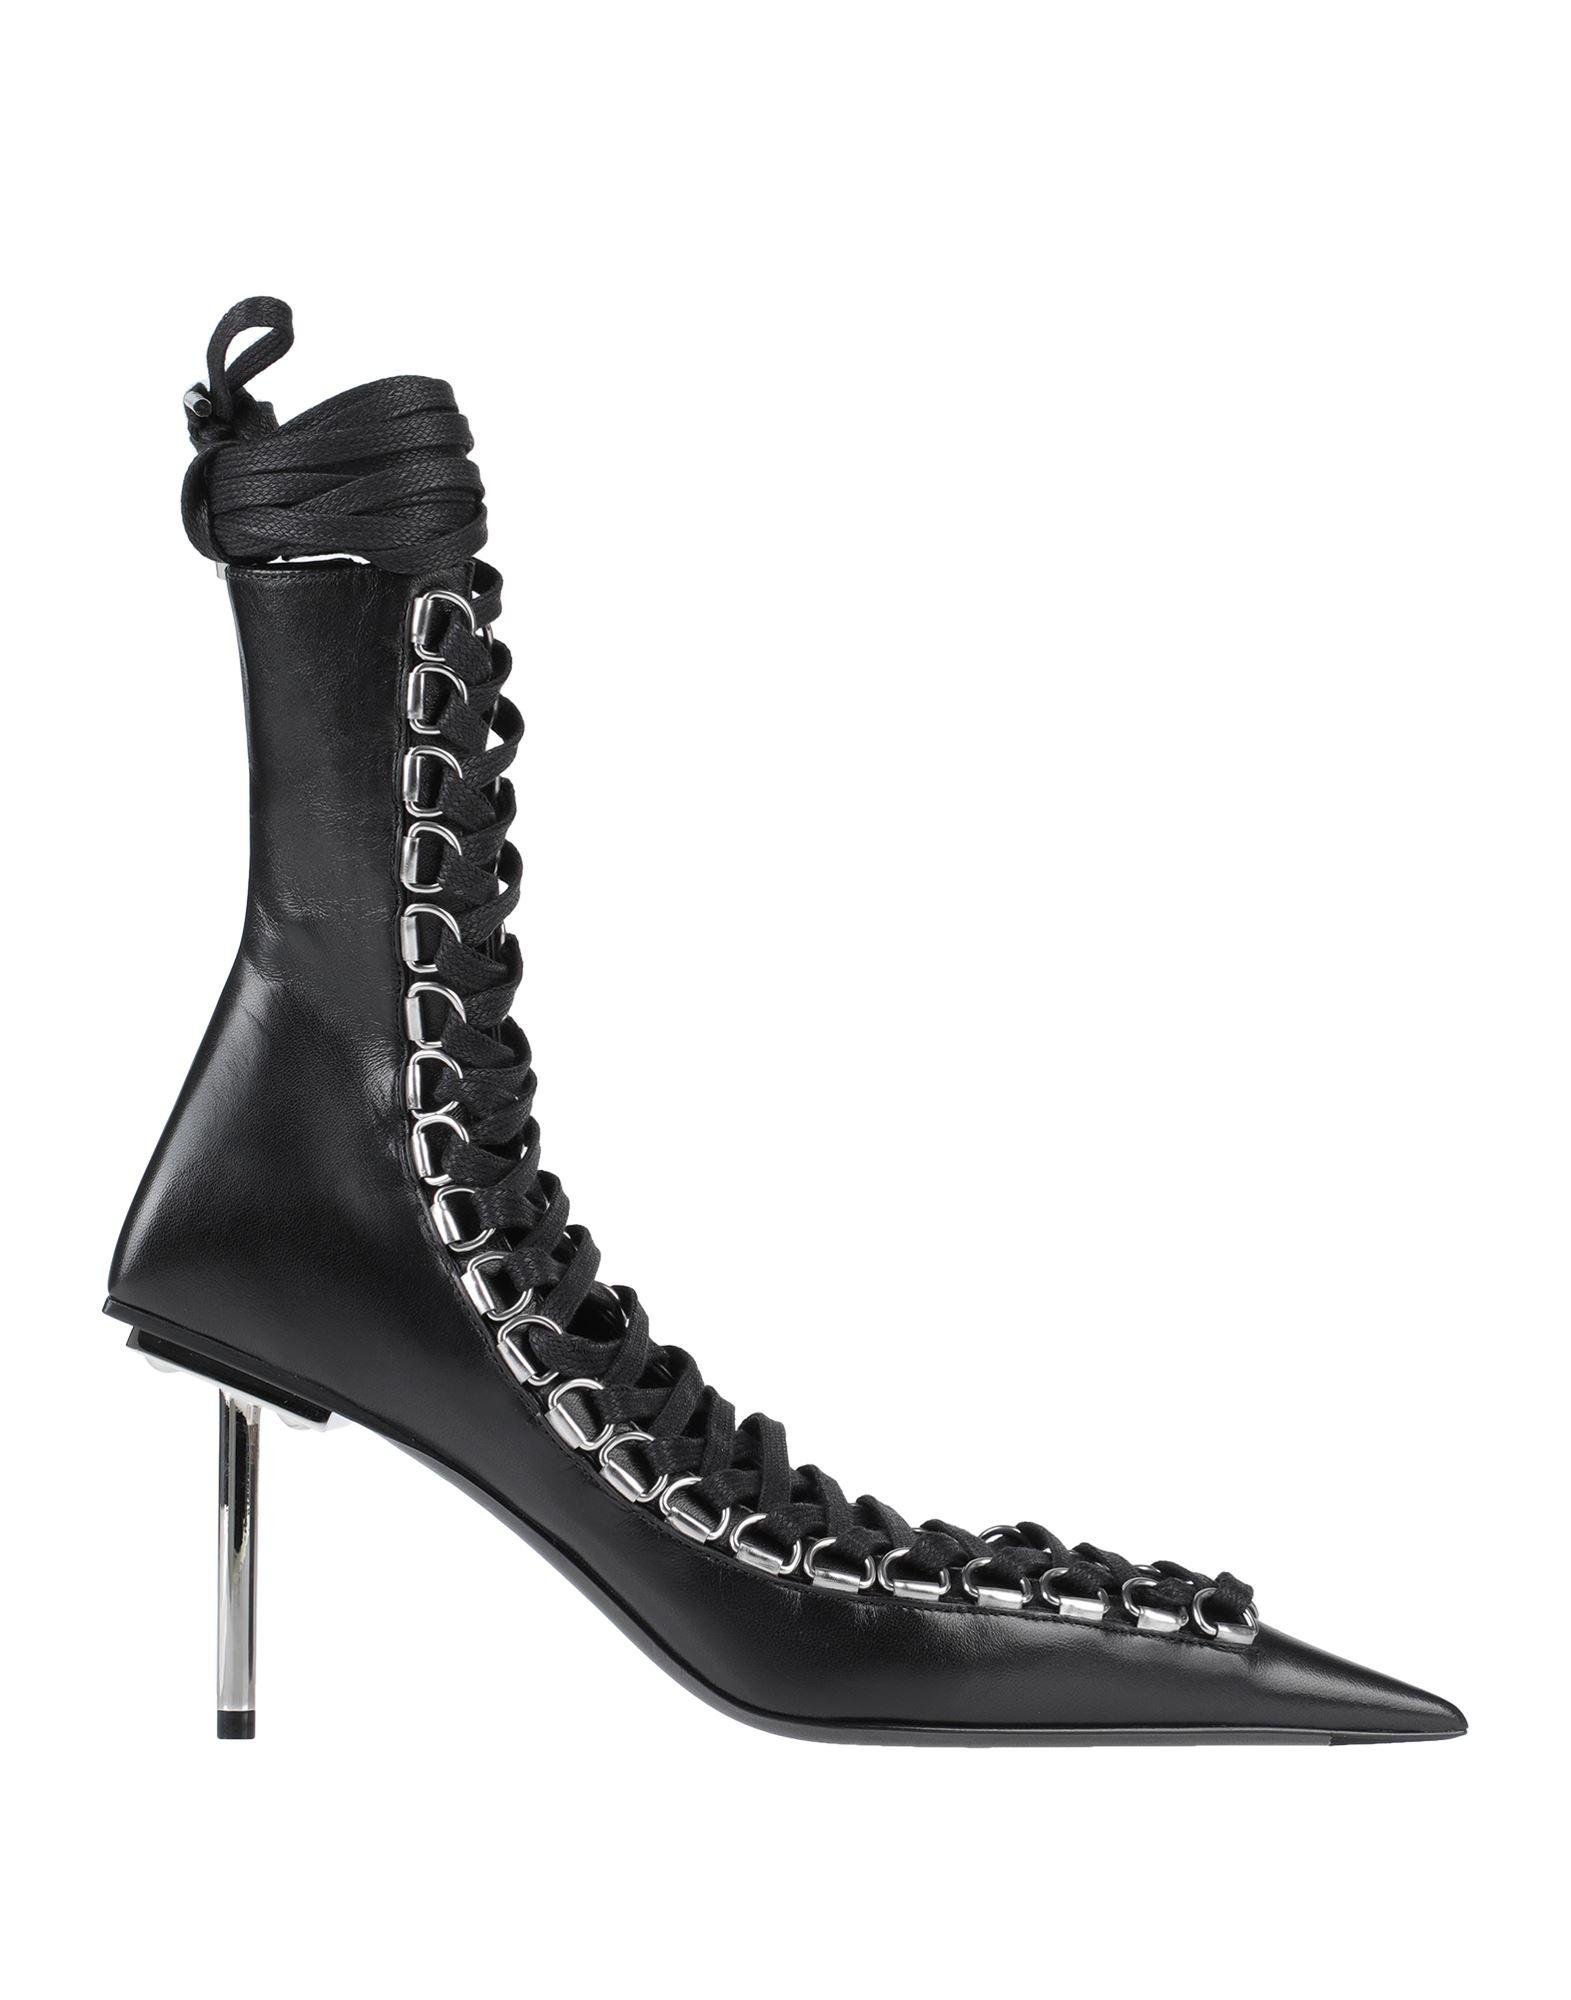 Balenciaga Ankle Boots Black | Lyst